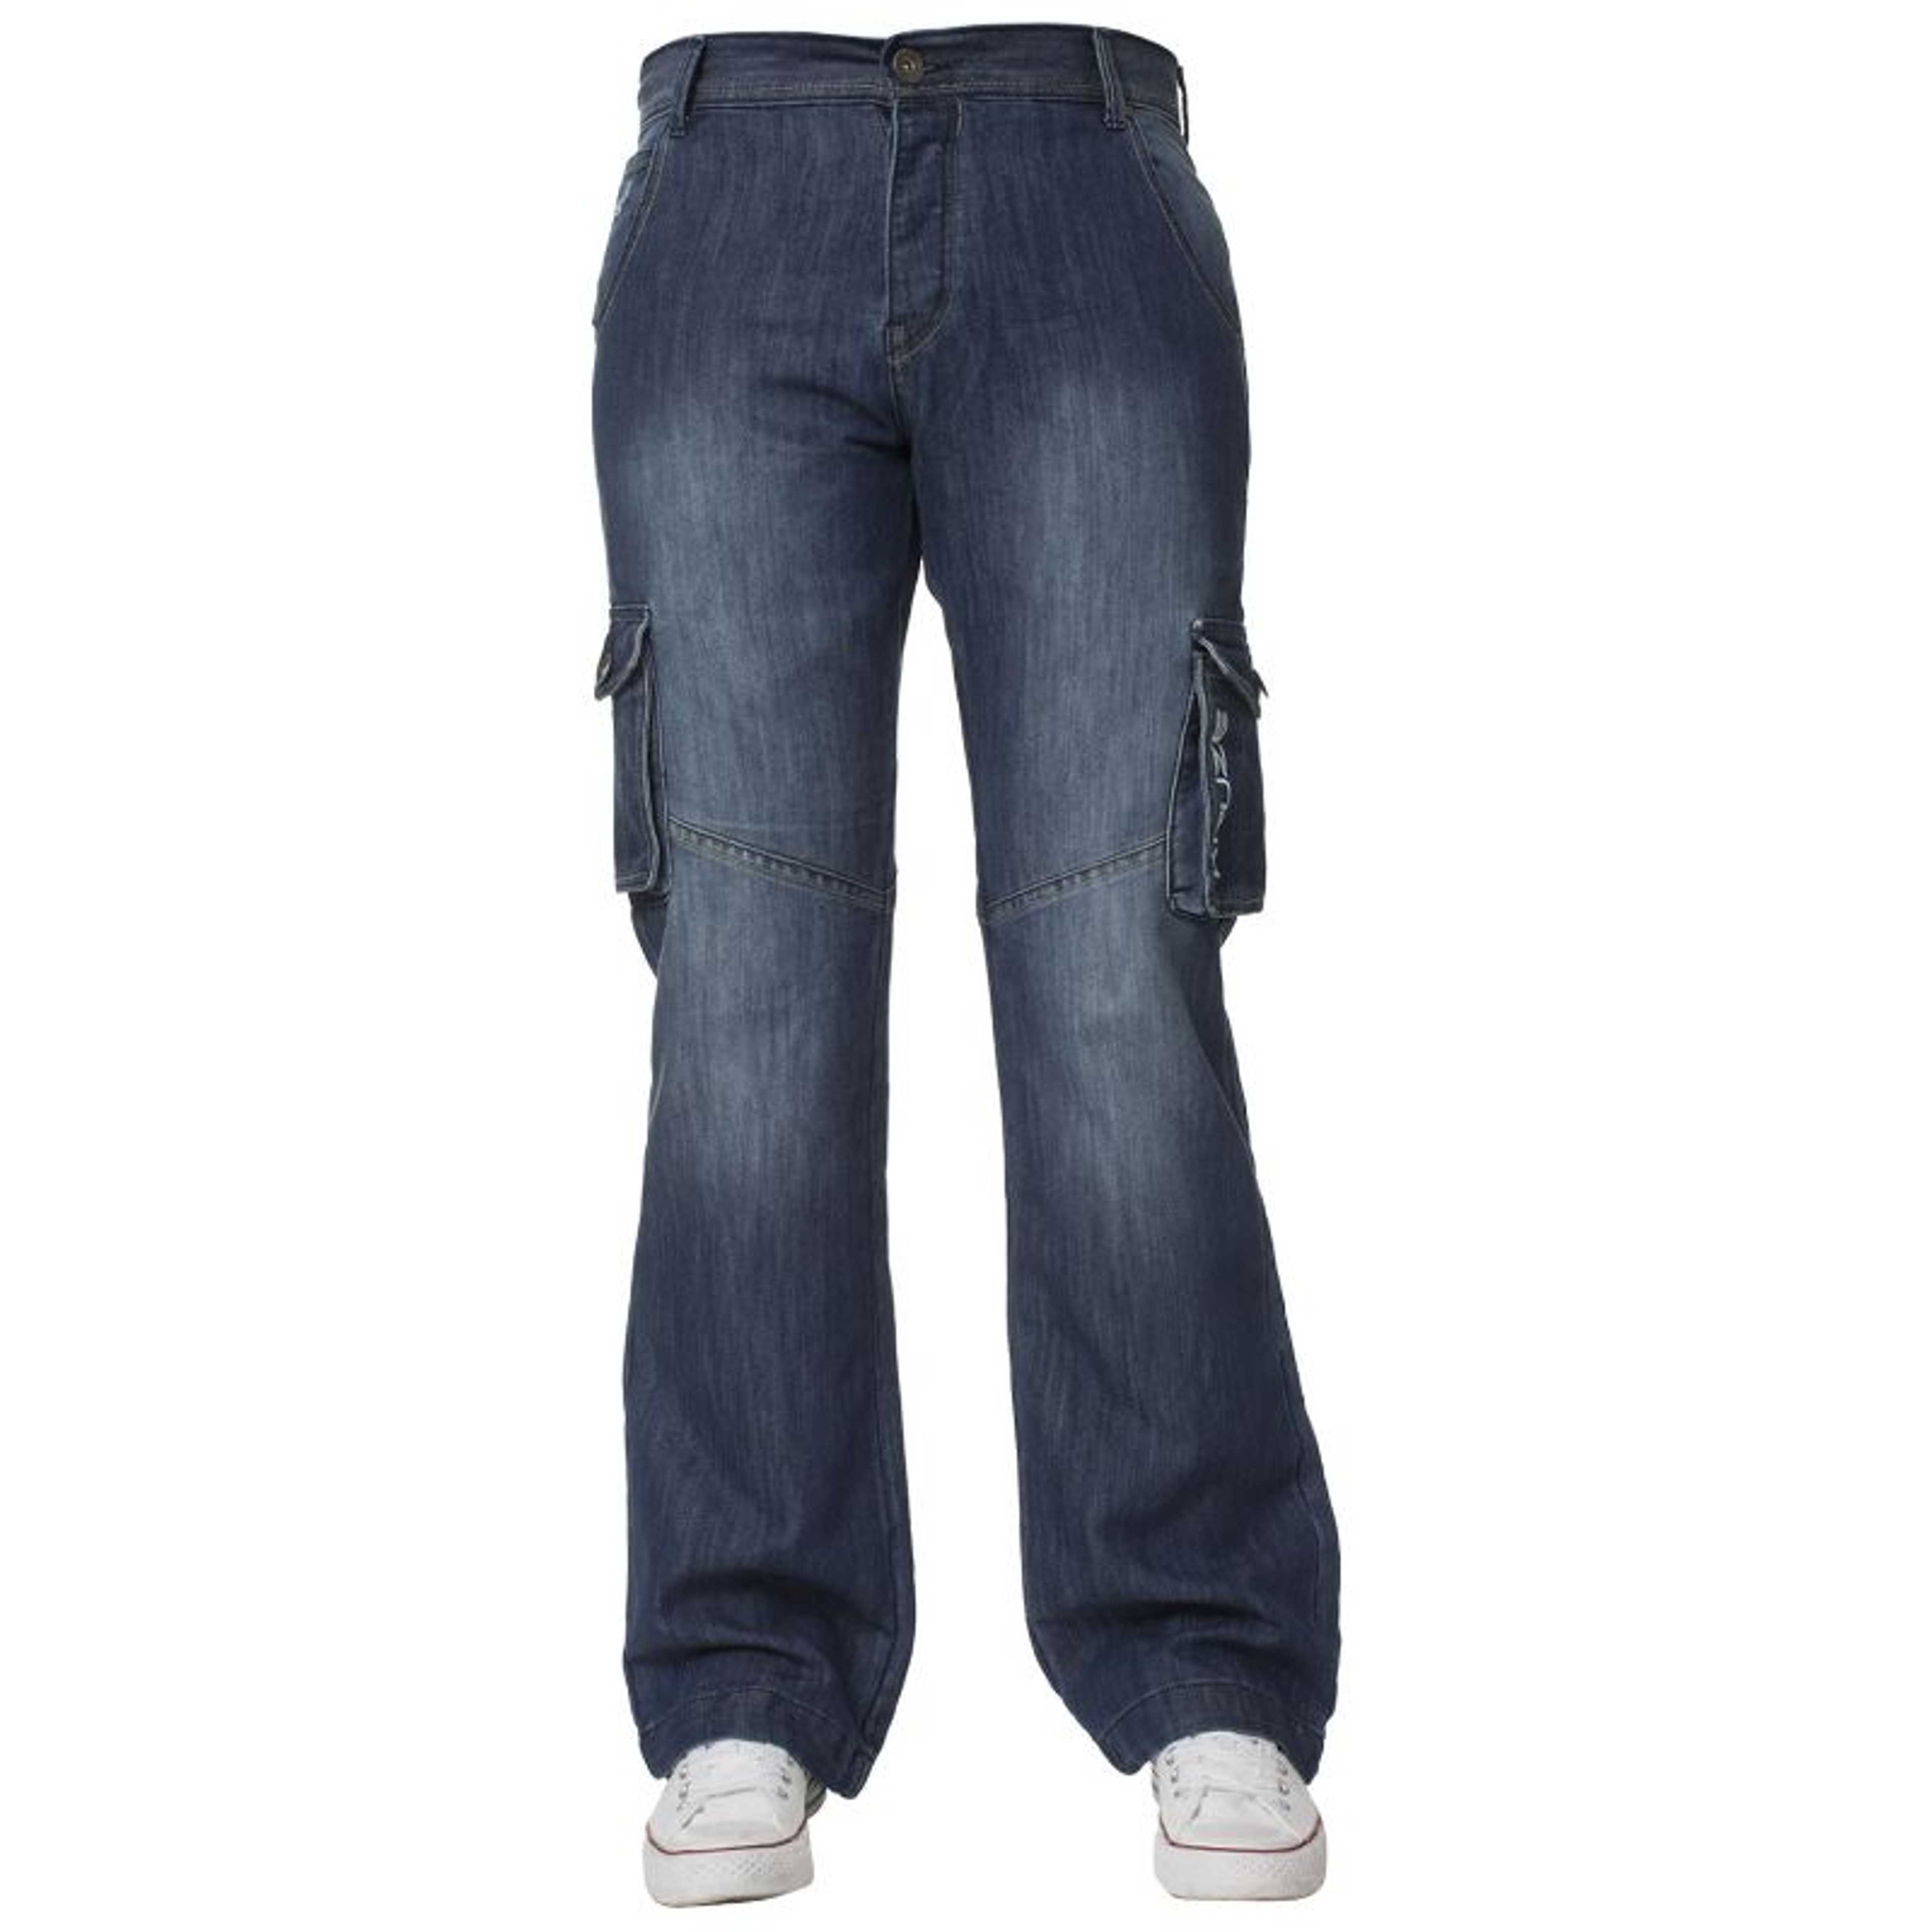 Rubahas Men’s Multi Pocket Denim Jeans Pant in Blue Color